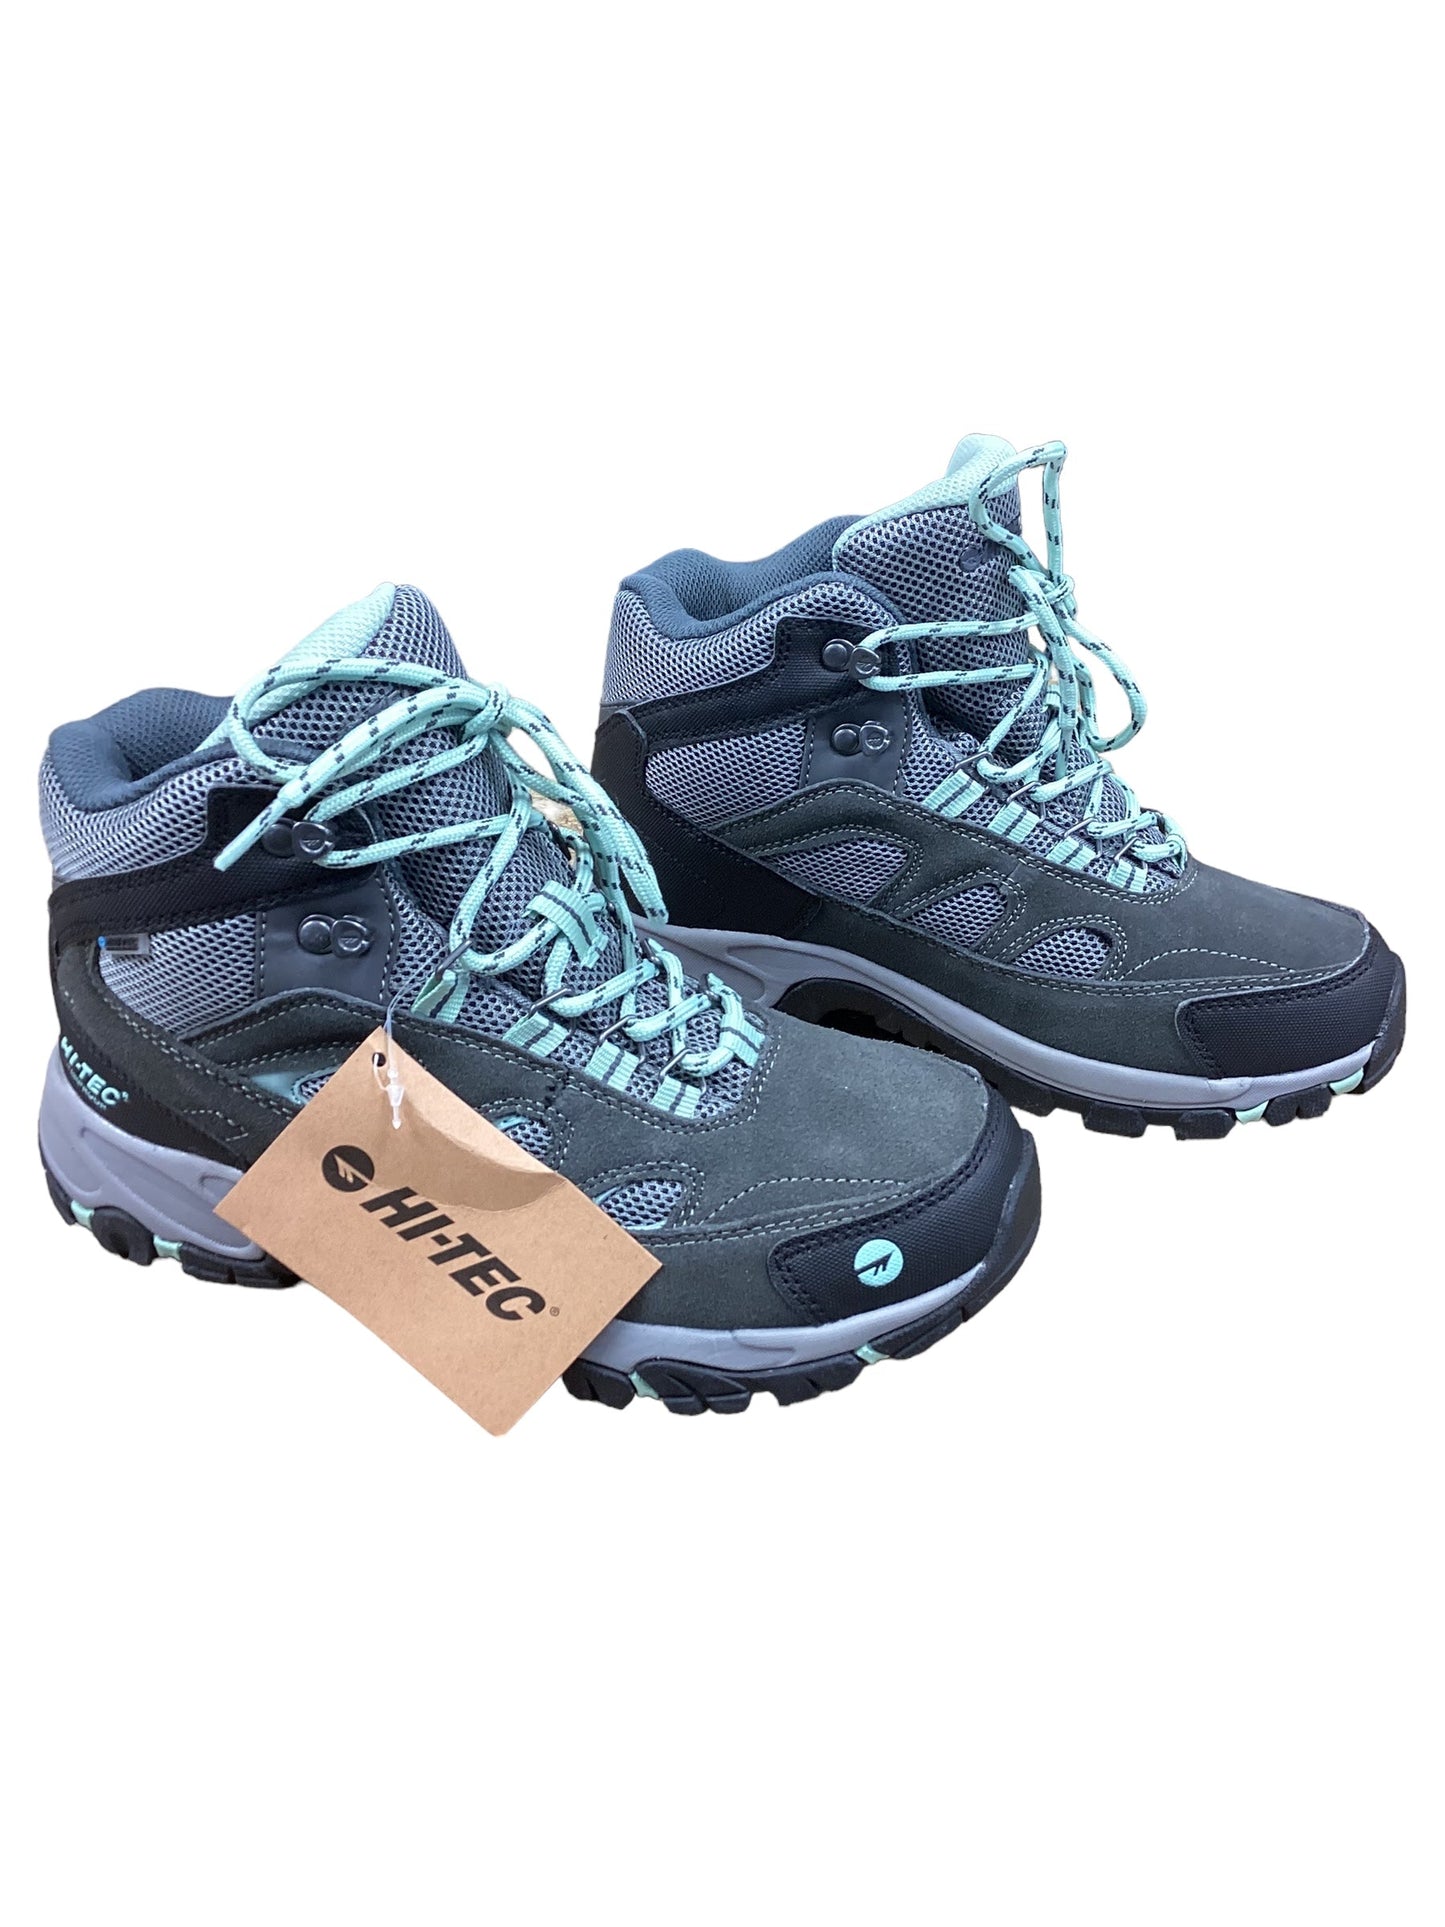 Grey Boots Hiking Cmc, Size 7.5